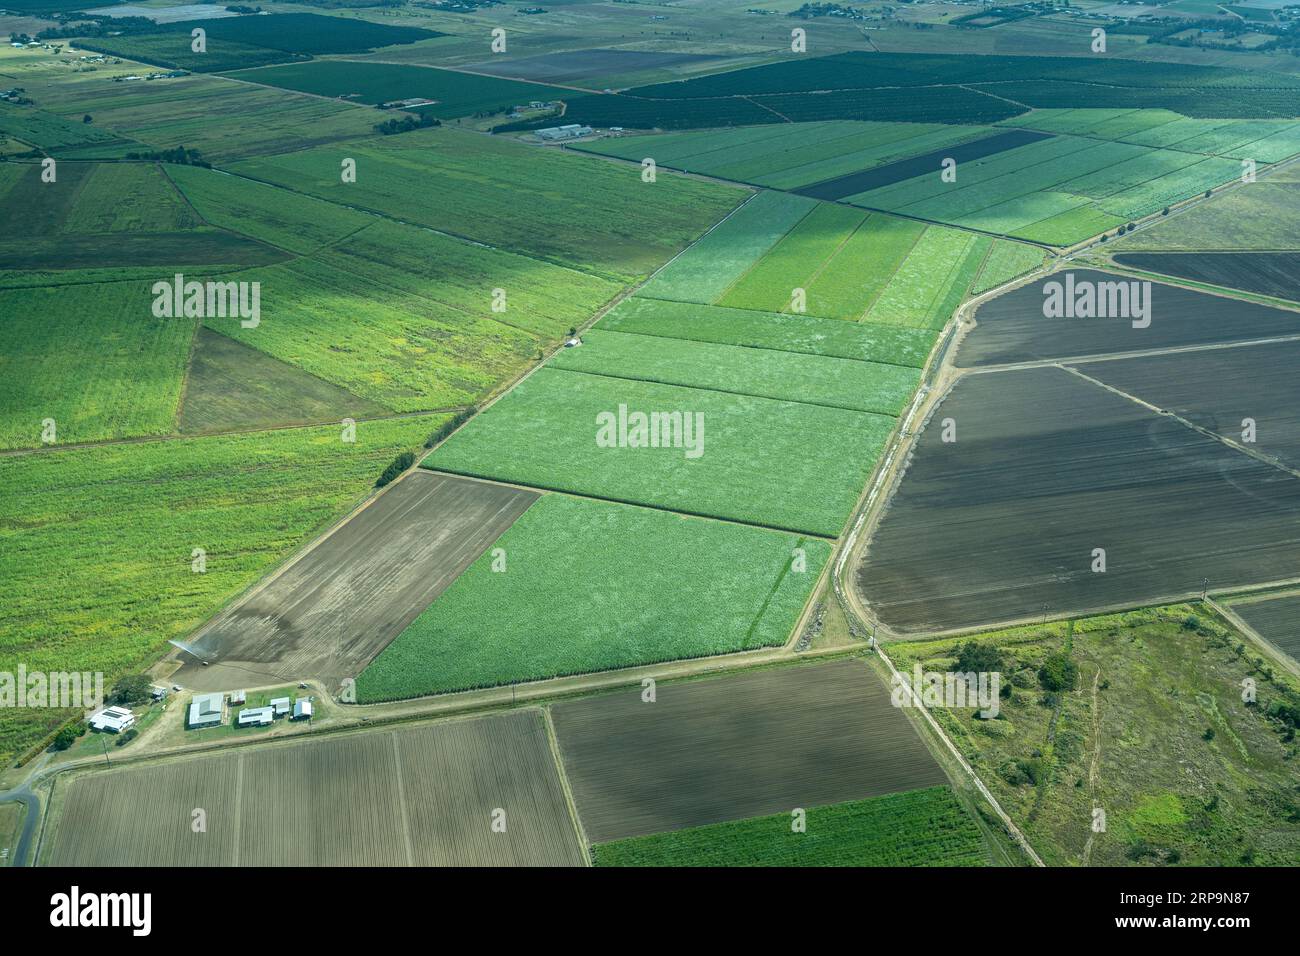 Aerial view of cane farms in the Burnett region near Bundaberg, Queensland Australia Stock Photo